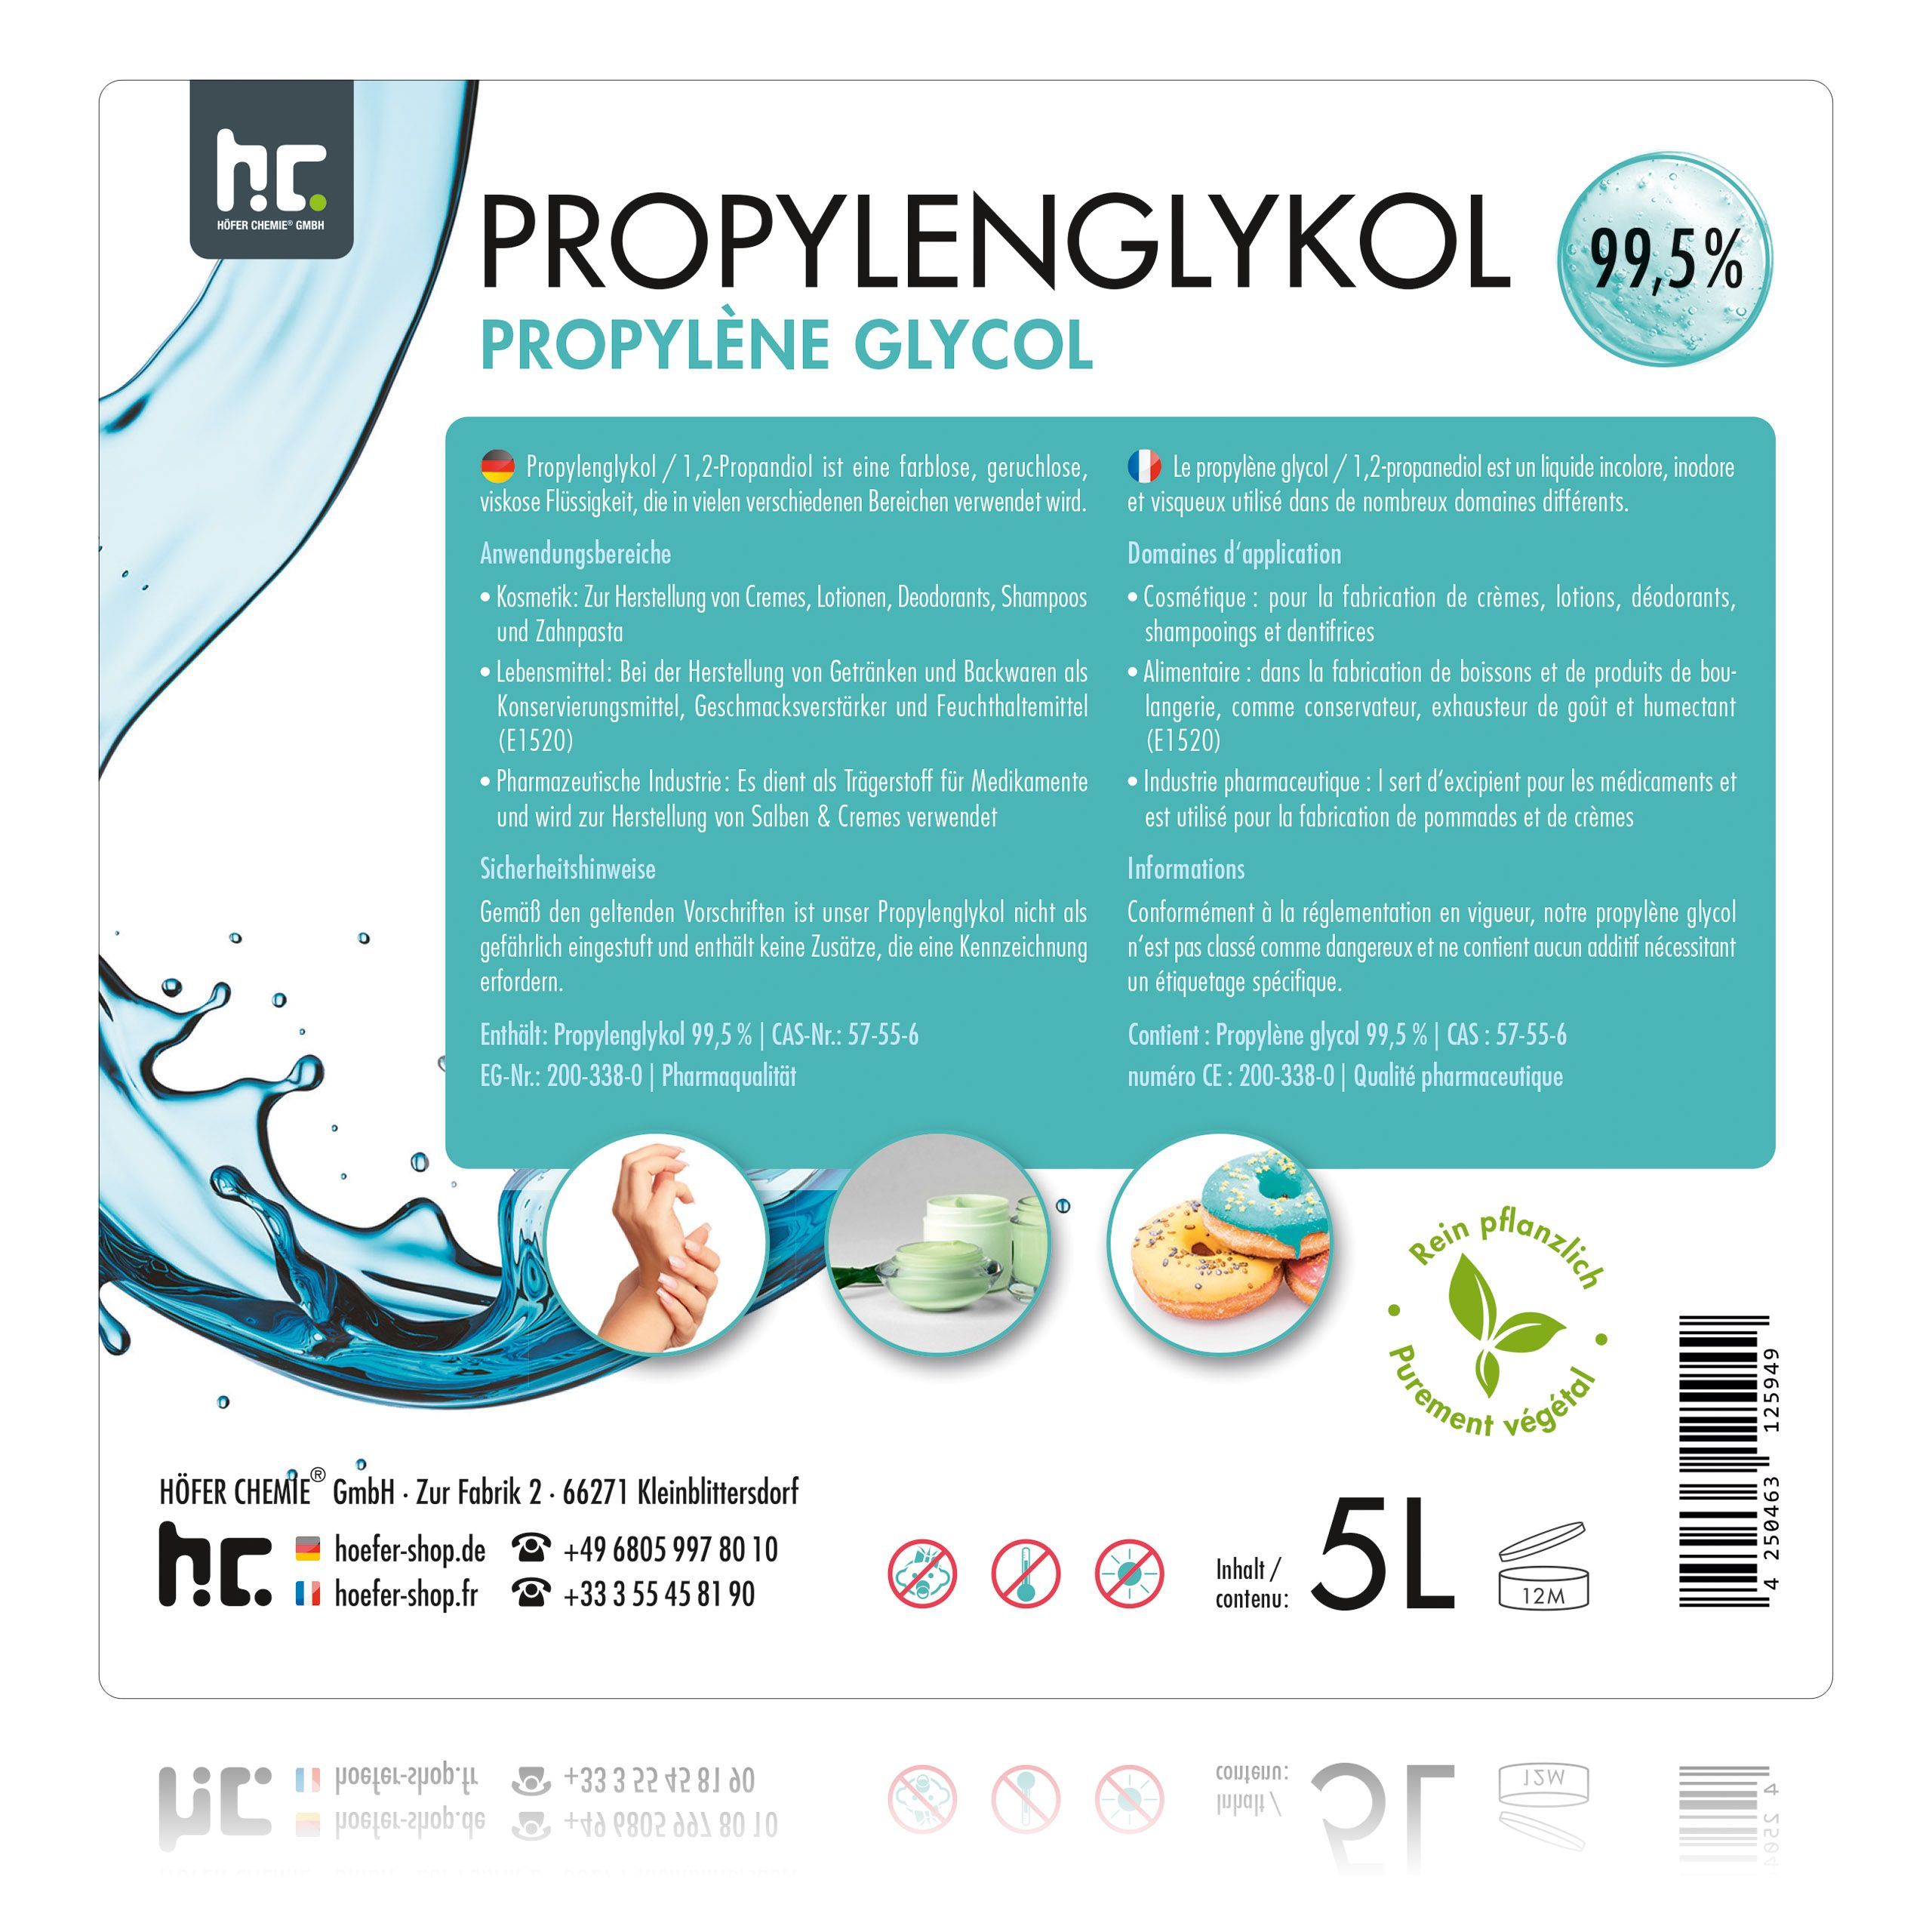 5 L Propylenglykol 99,5% in Pharmaqualität